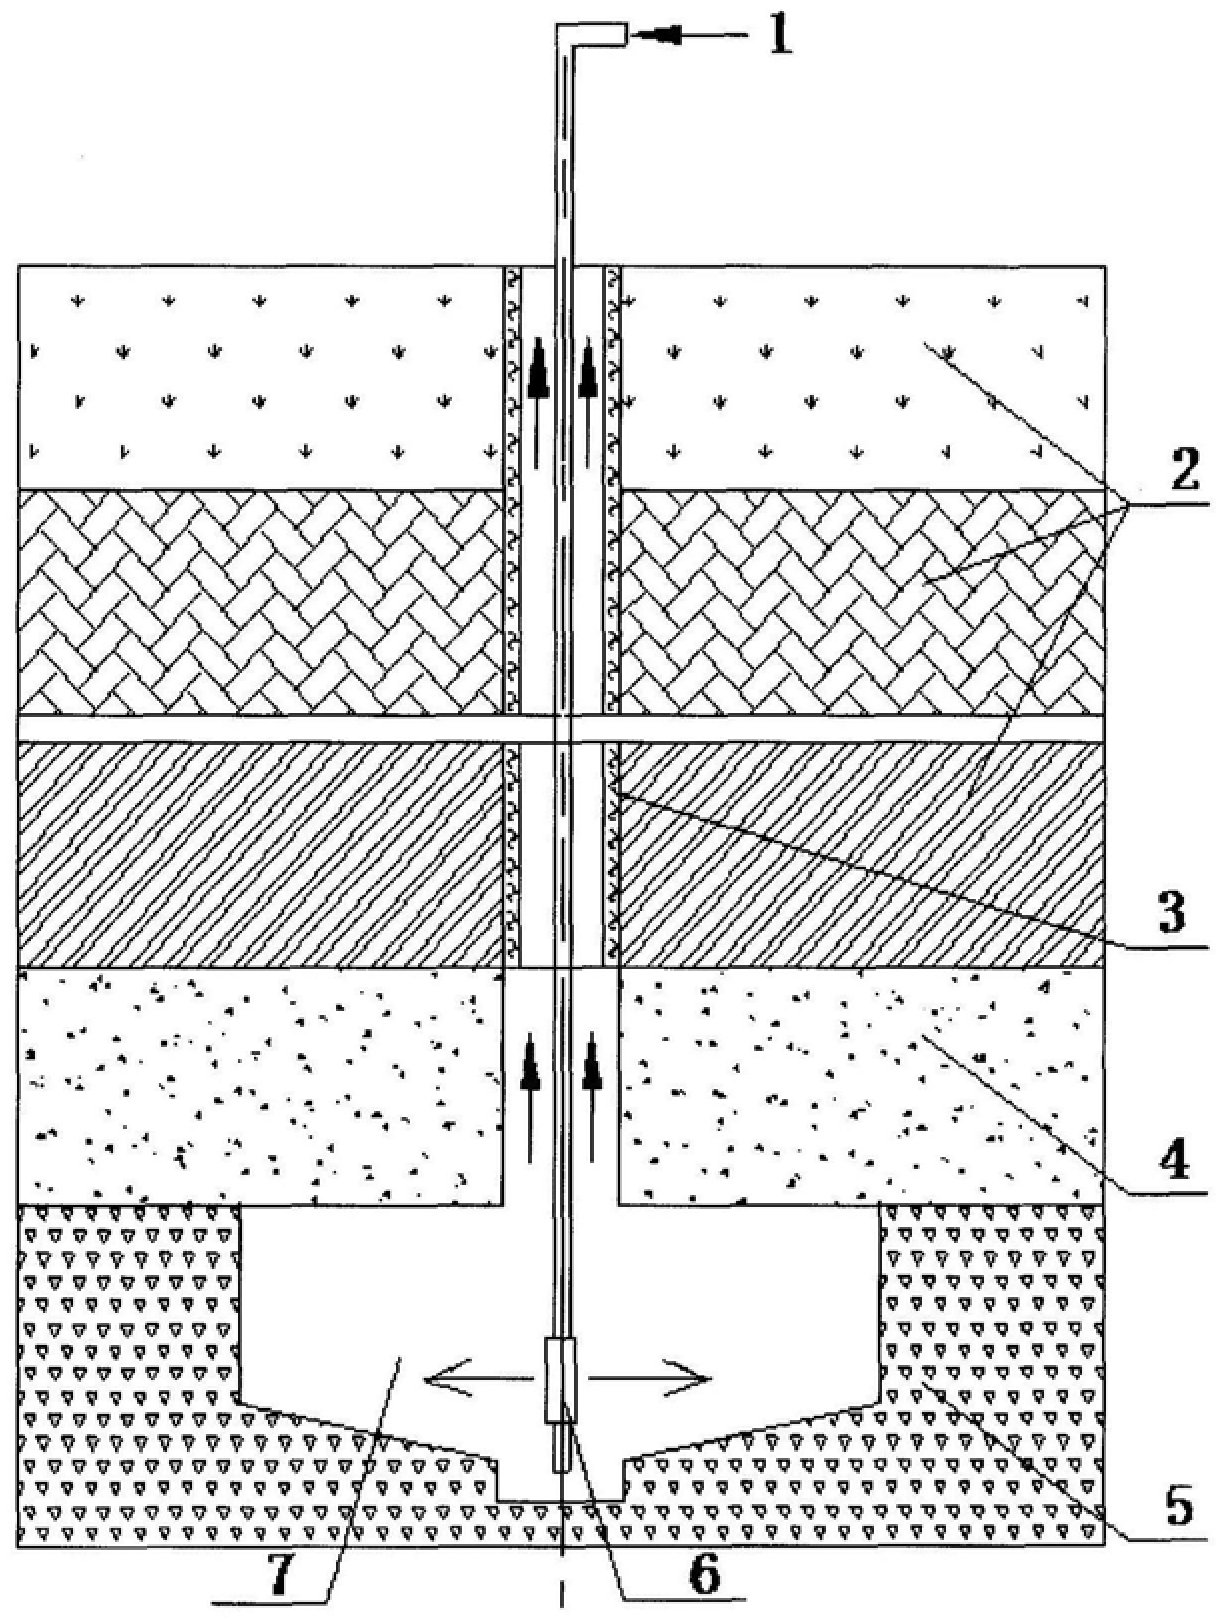 Uranium mining method by in-situ loosening and leaching